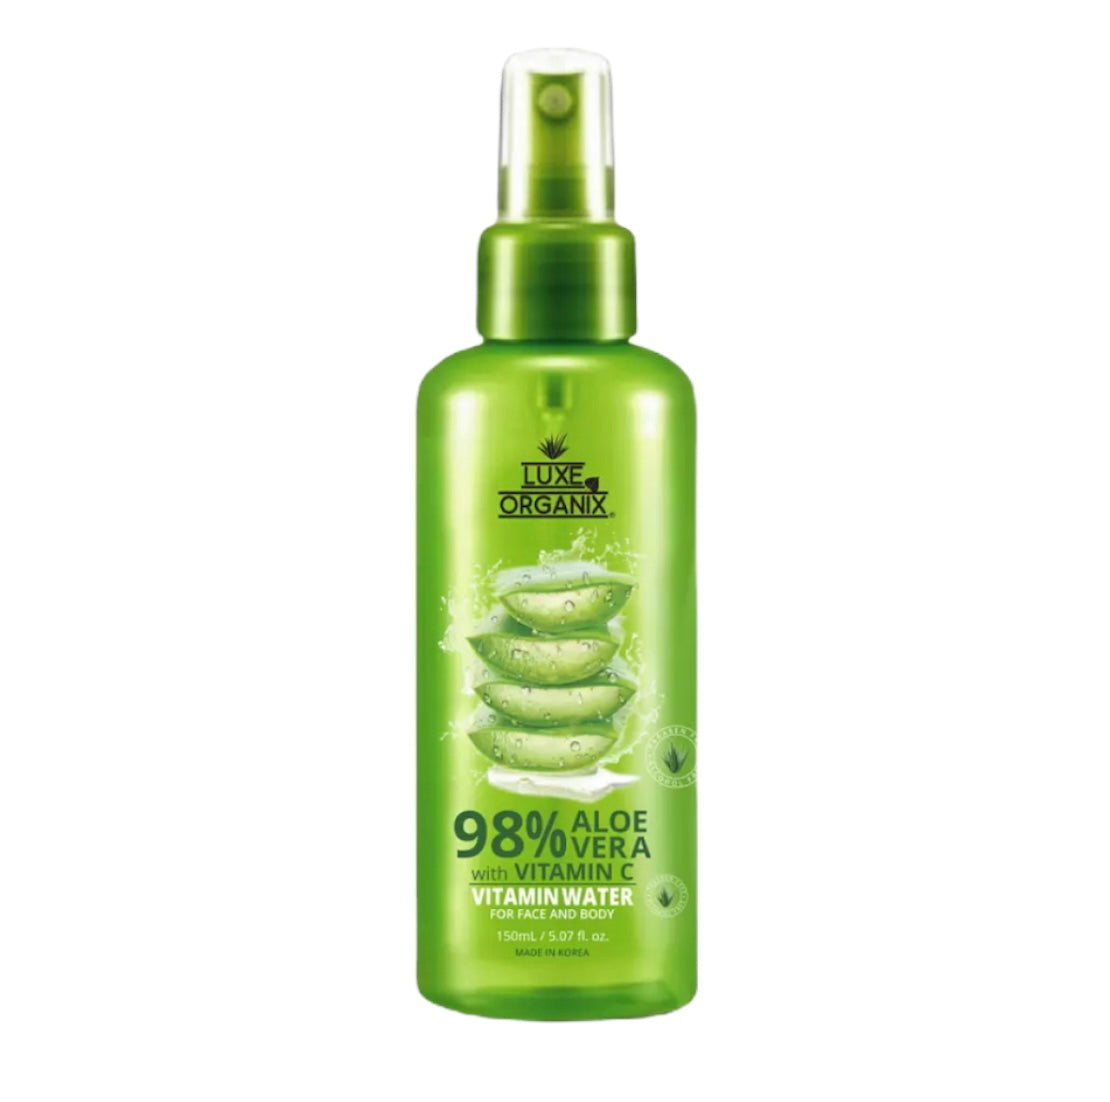 Luxe Organix 98% Aloe Vera Vitamin Water for Face & Body 150ml